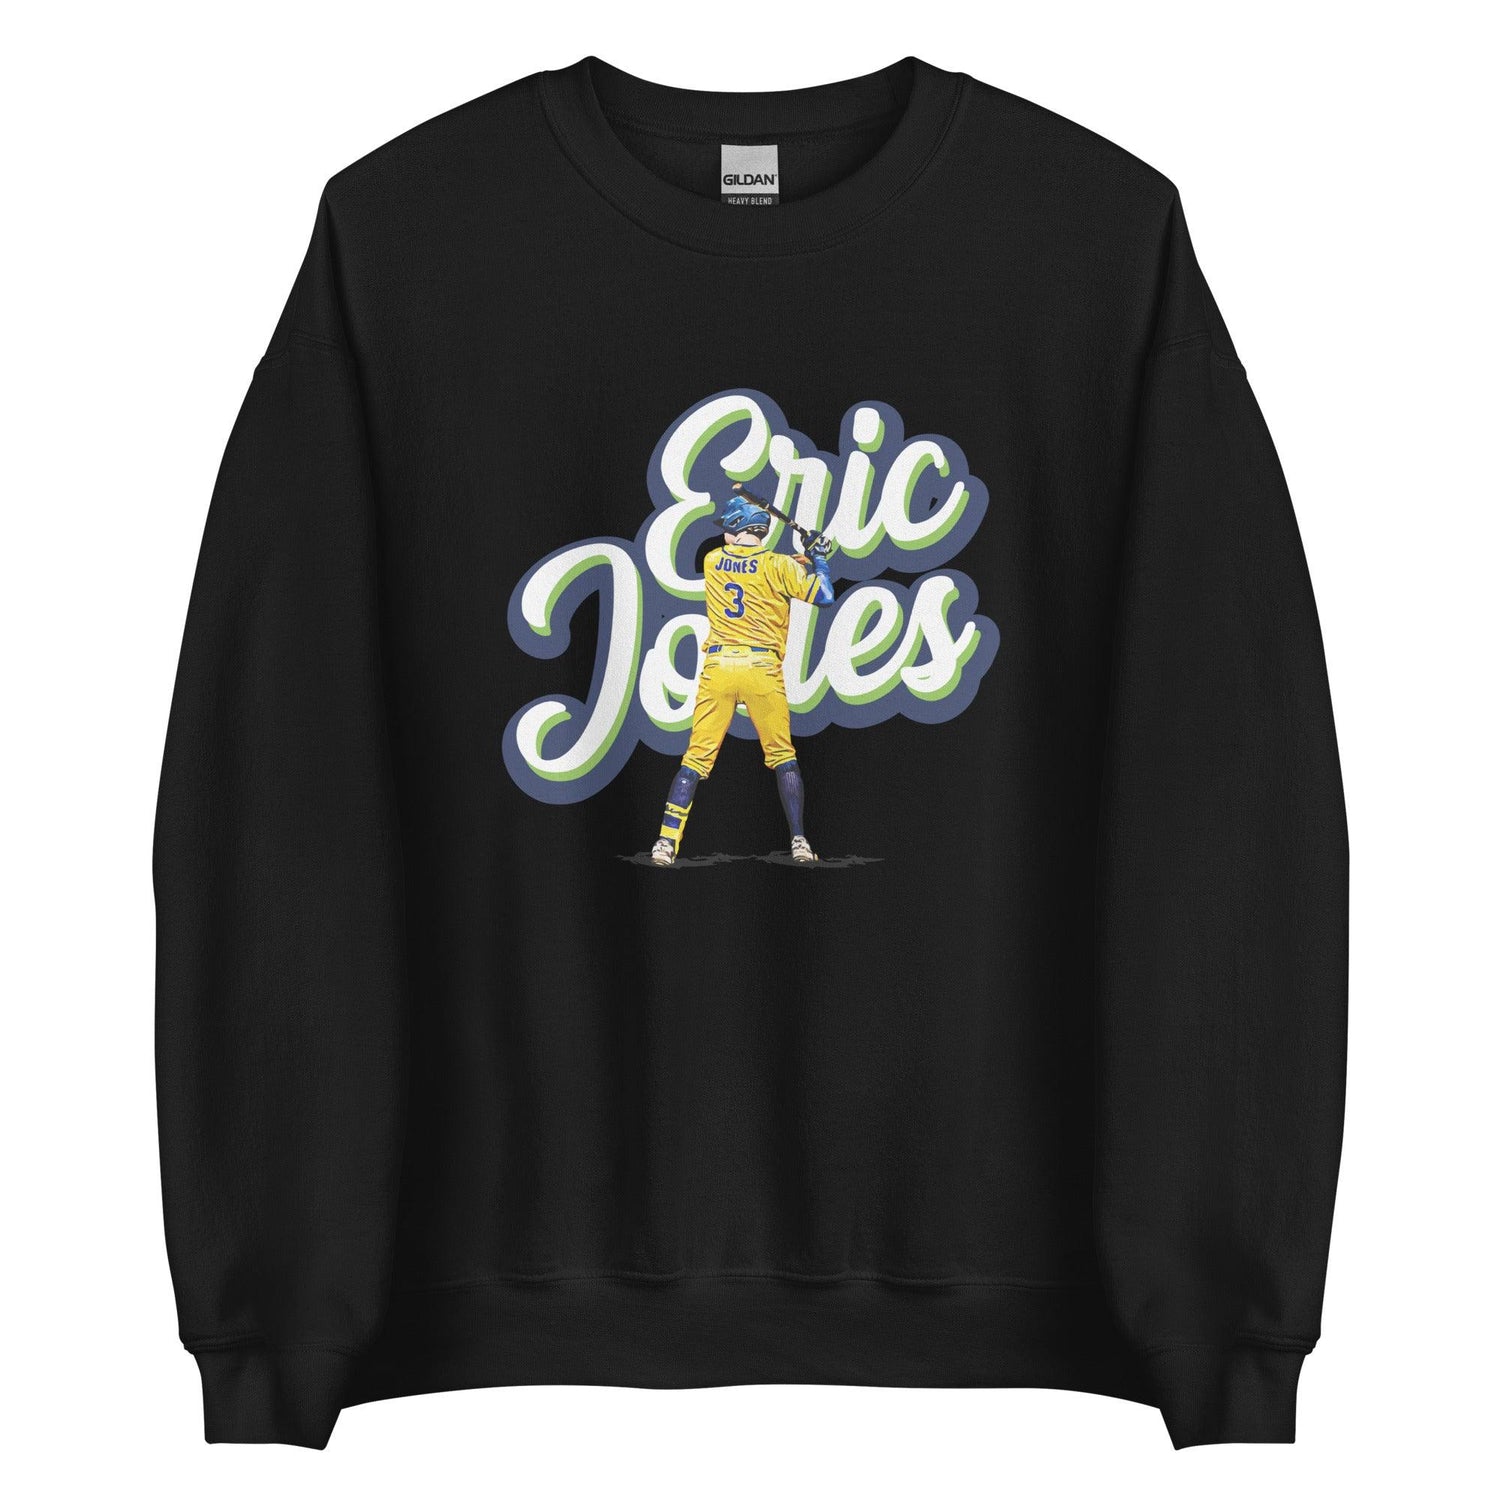 Eric Jones  "Gameday" Sweatshirt - Fan Arch